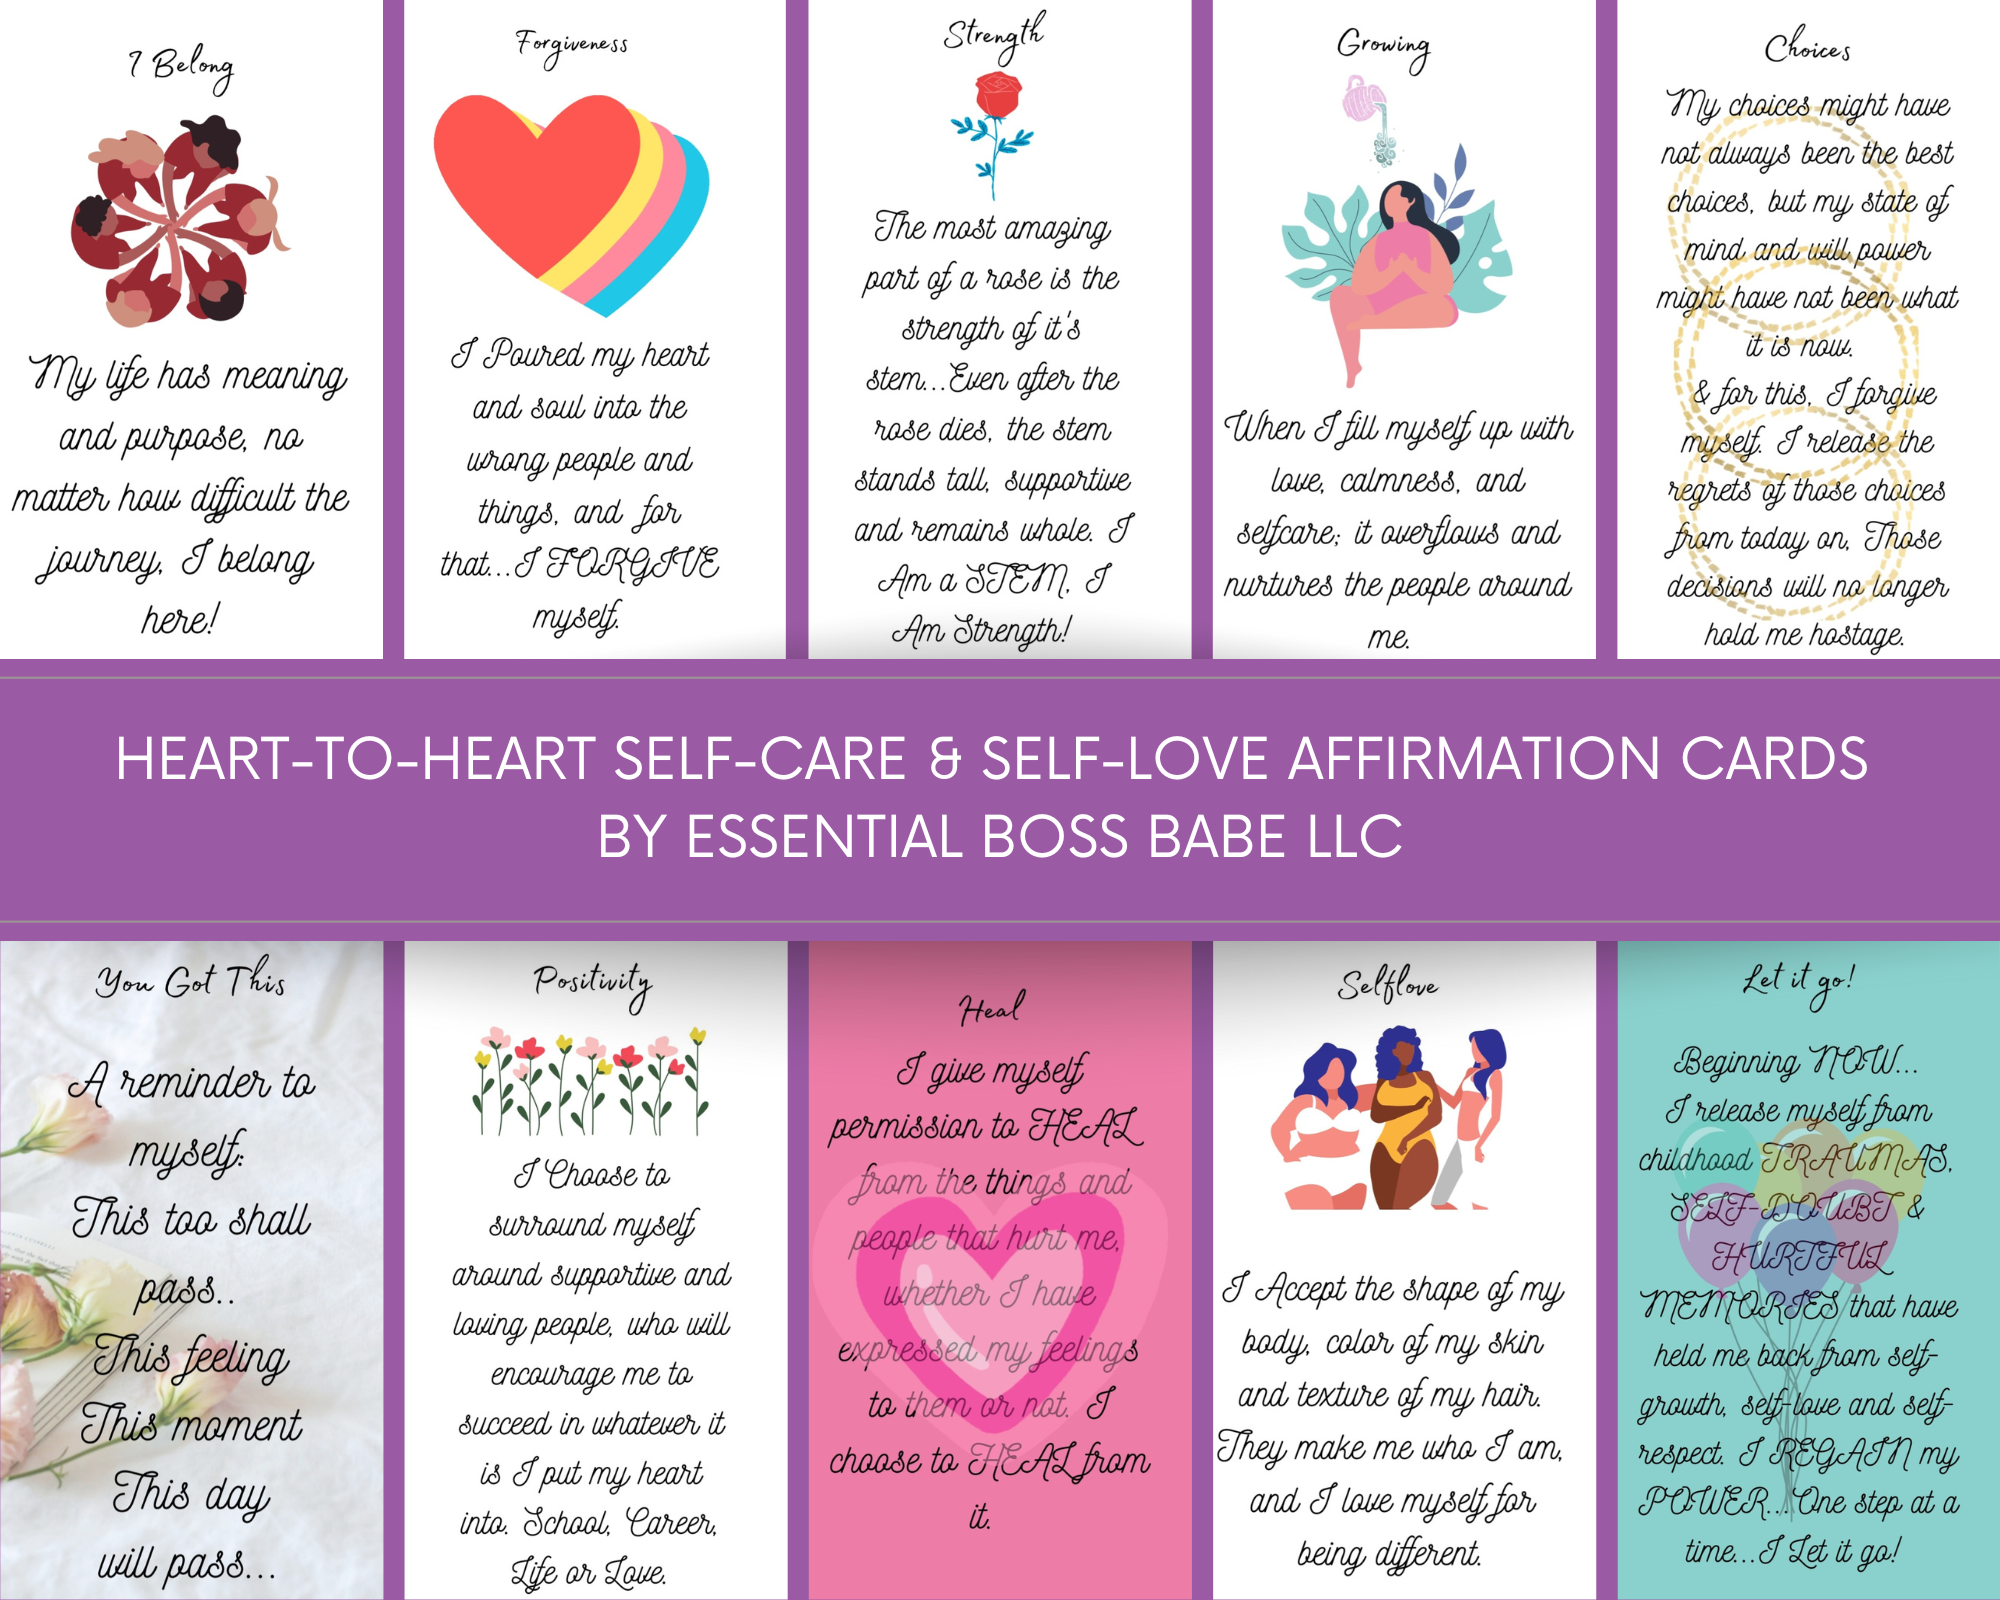 DV survivors focus on self-care and self-love